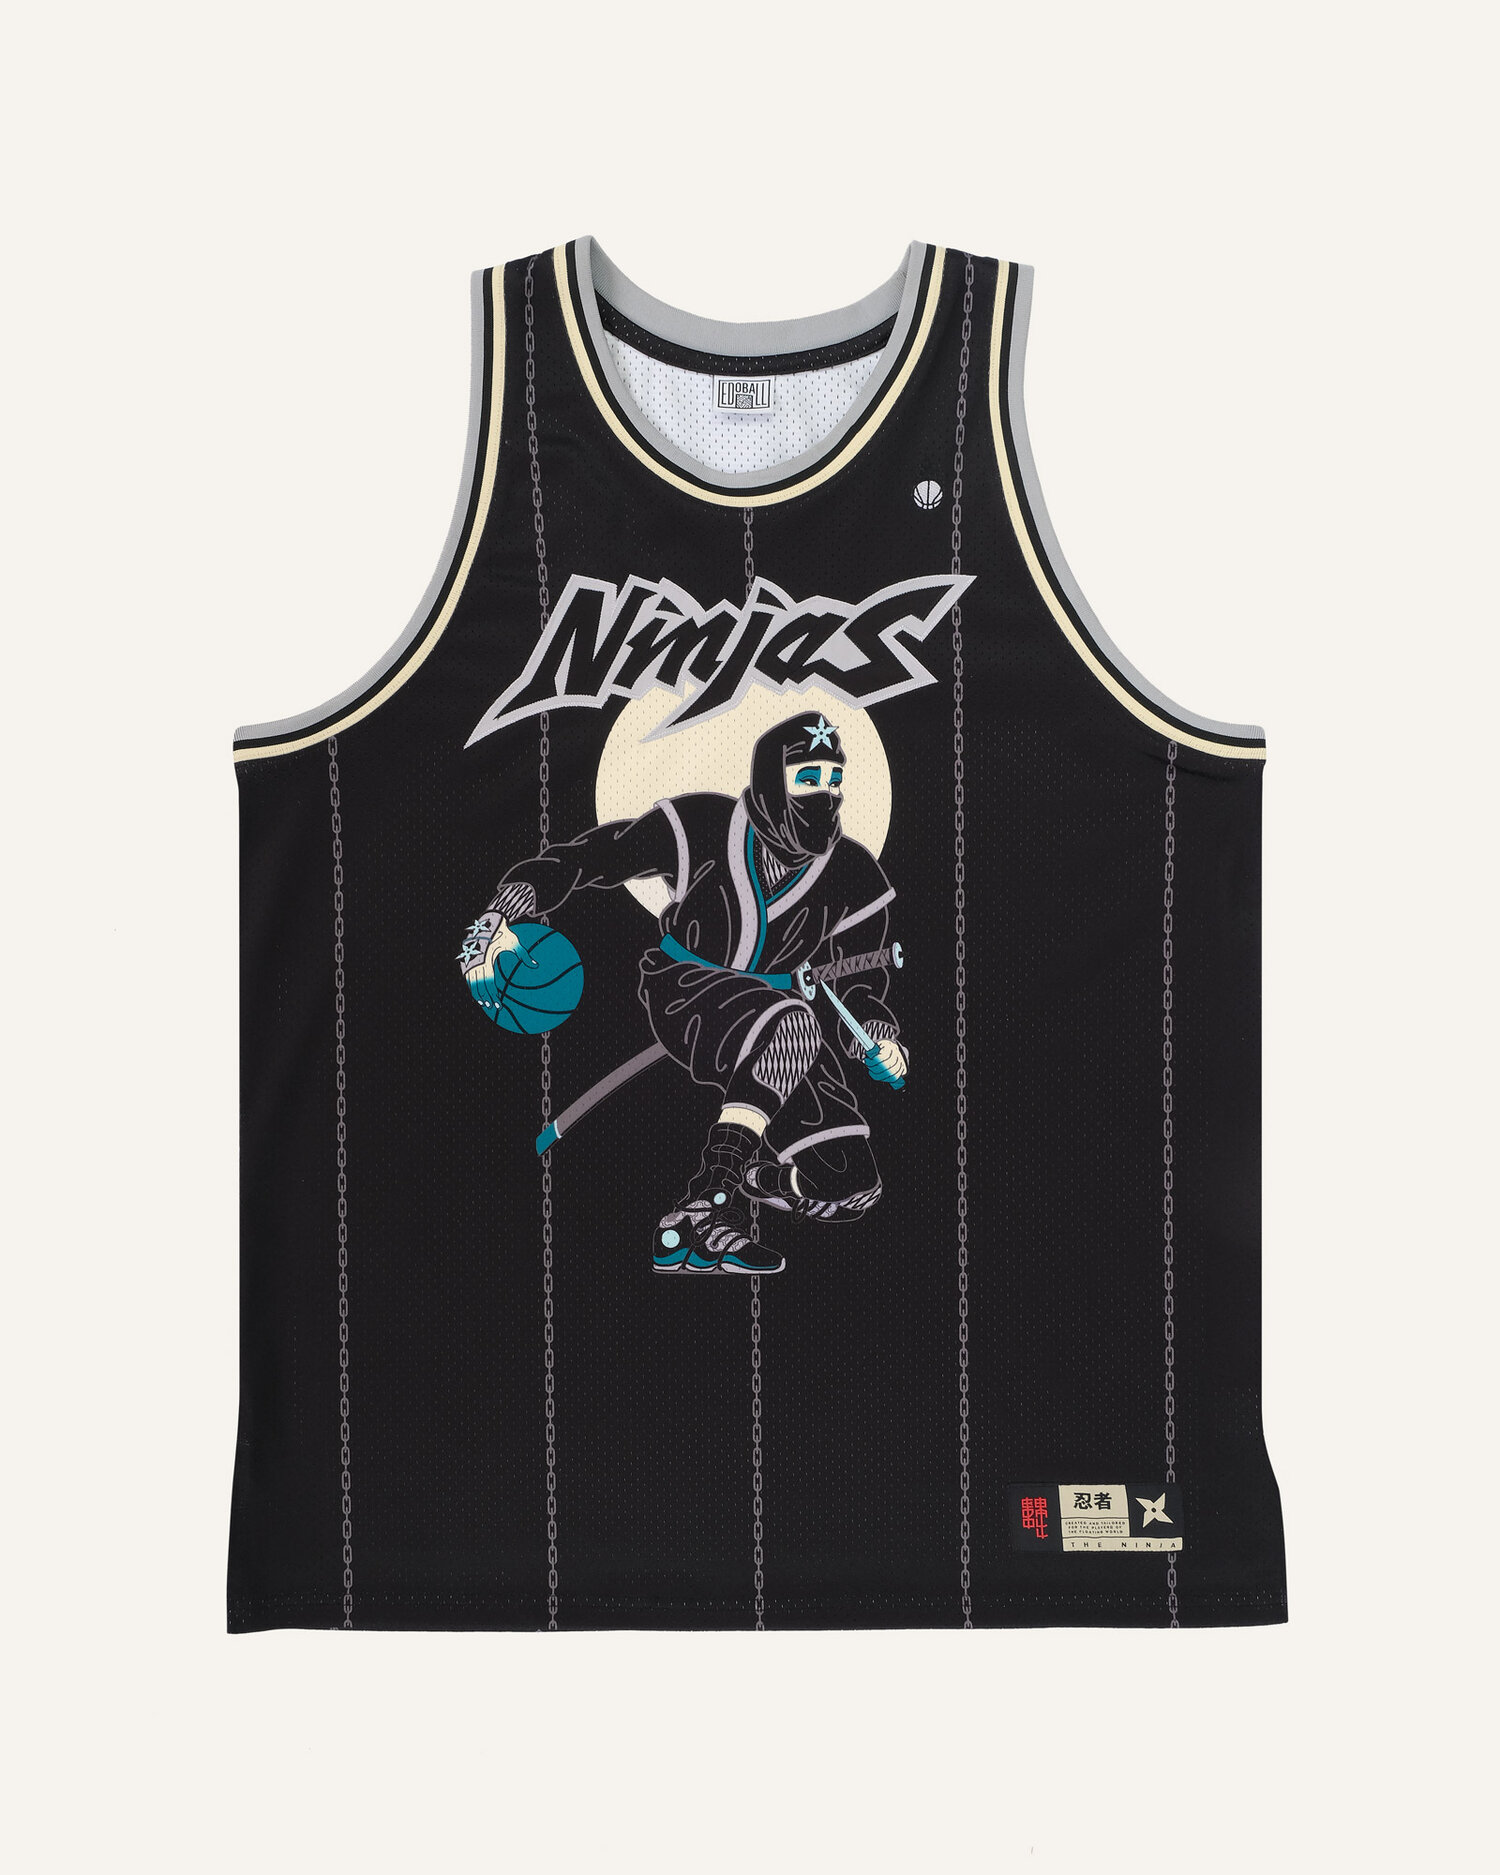 Custom Basketball Jerseys & Uniforms - Basketball Art & Jerseys by Edo Ball